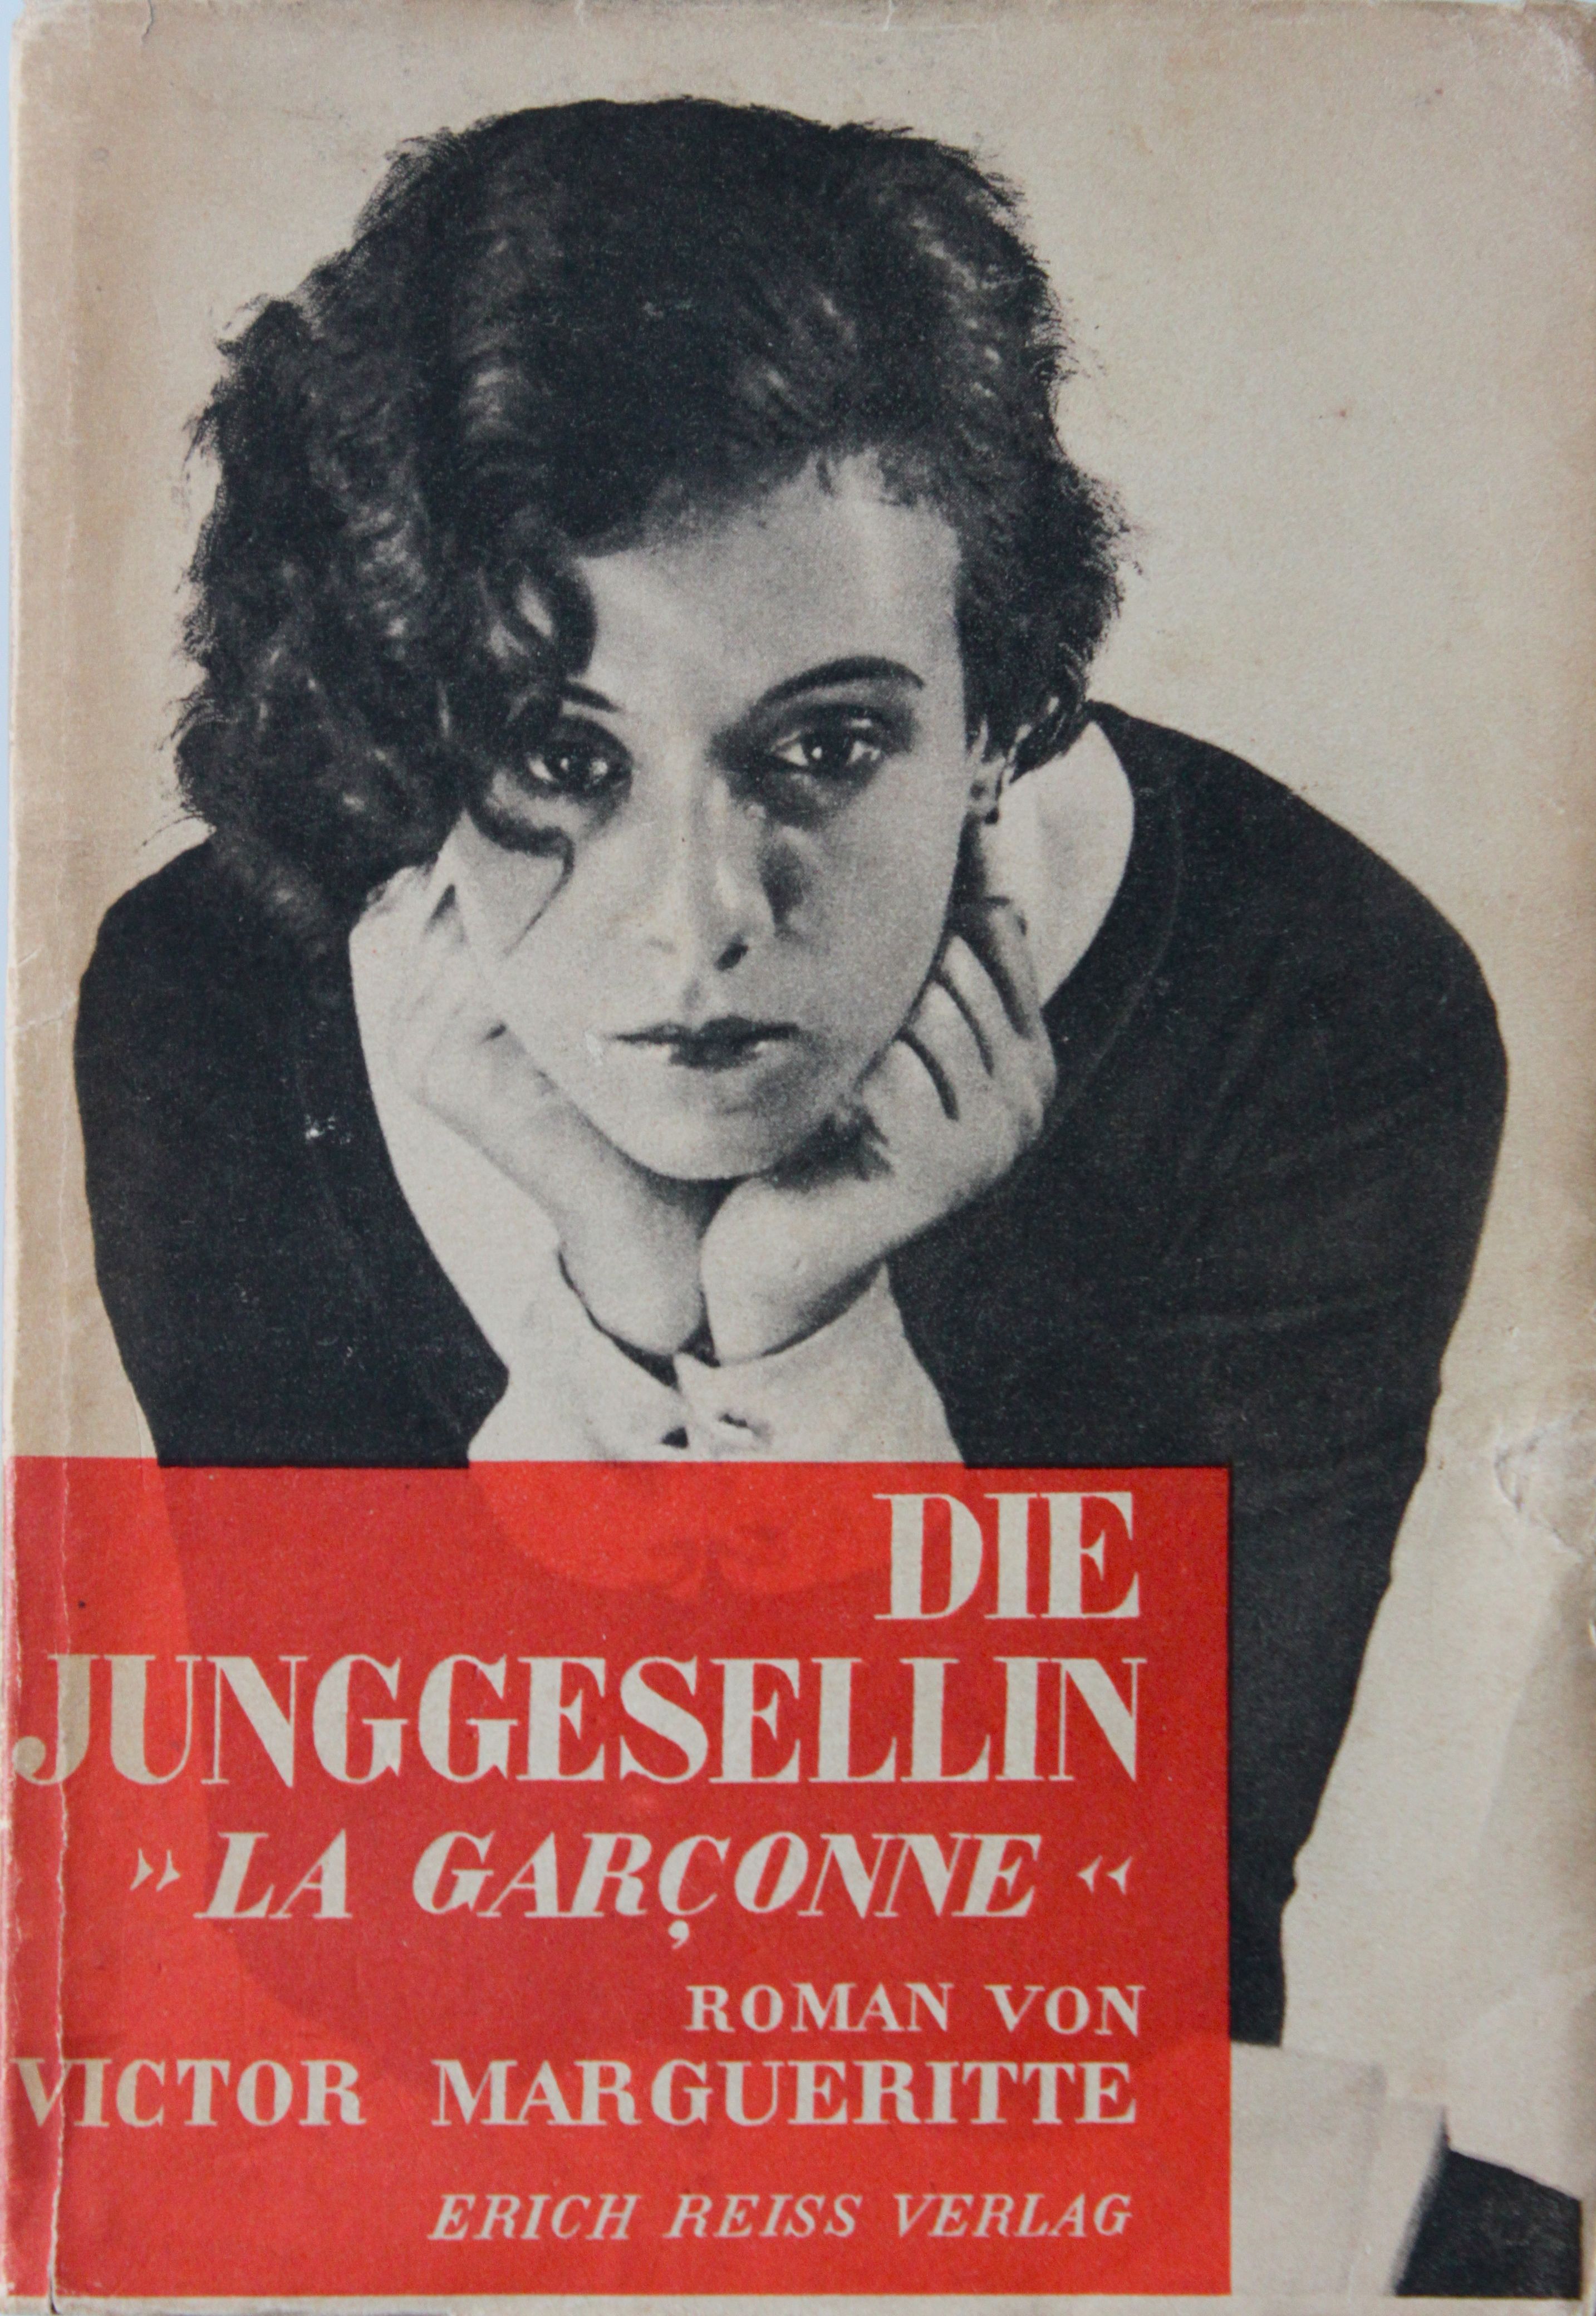 Margueritte, Die Junggesellin, 1931